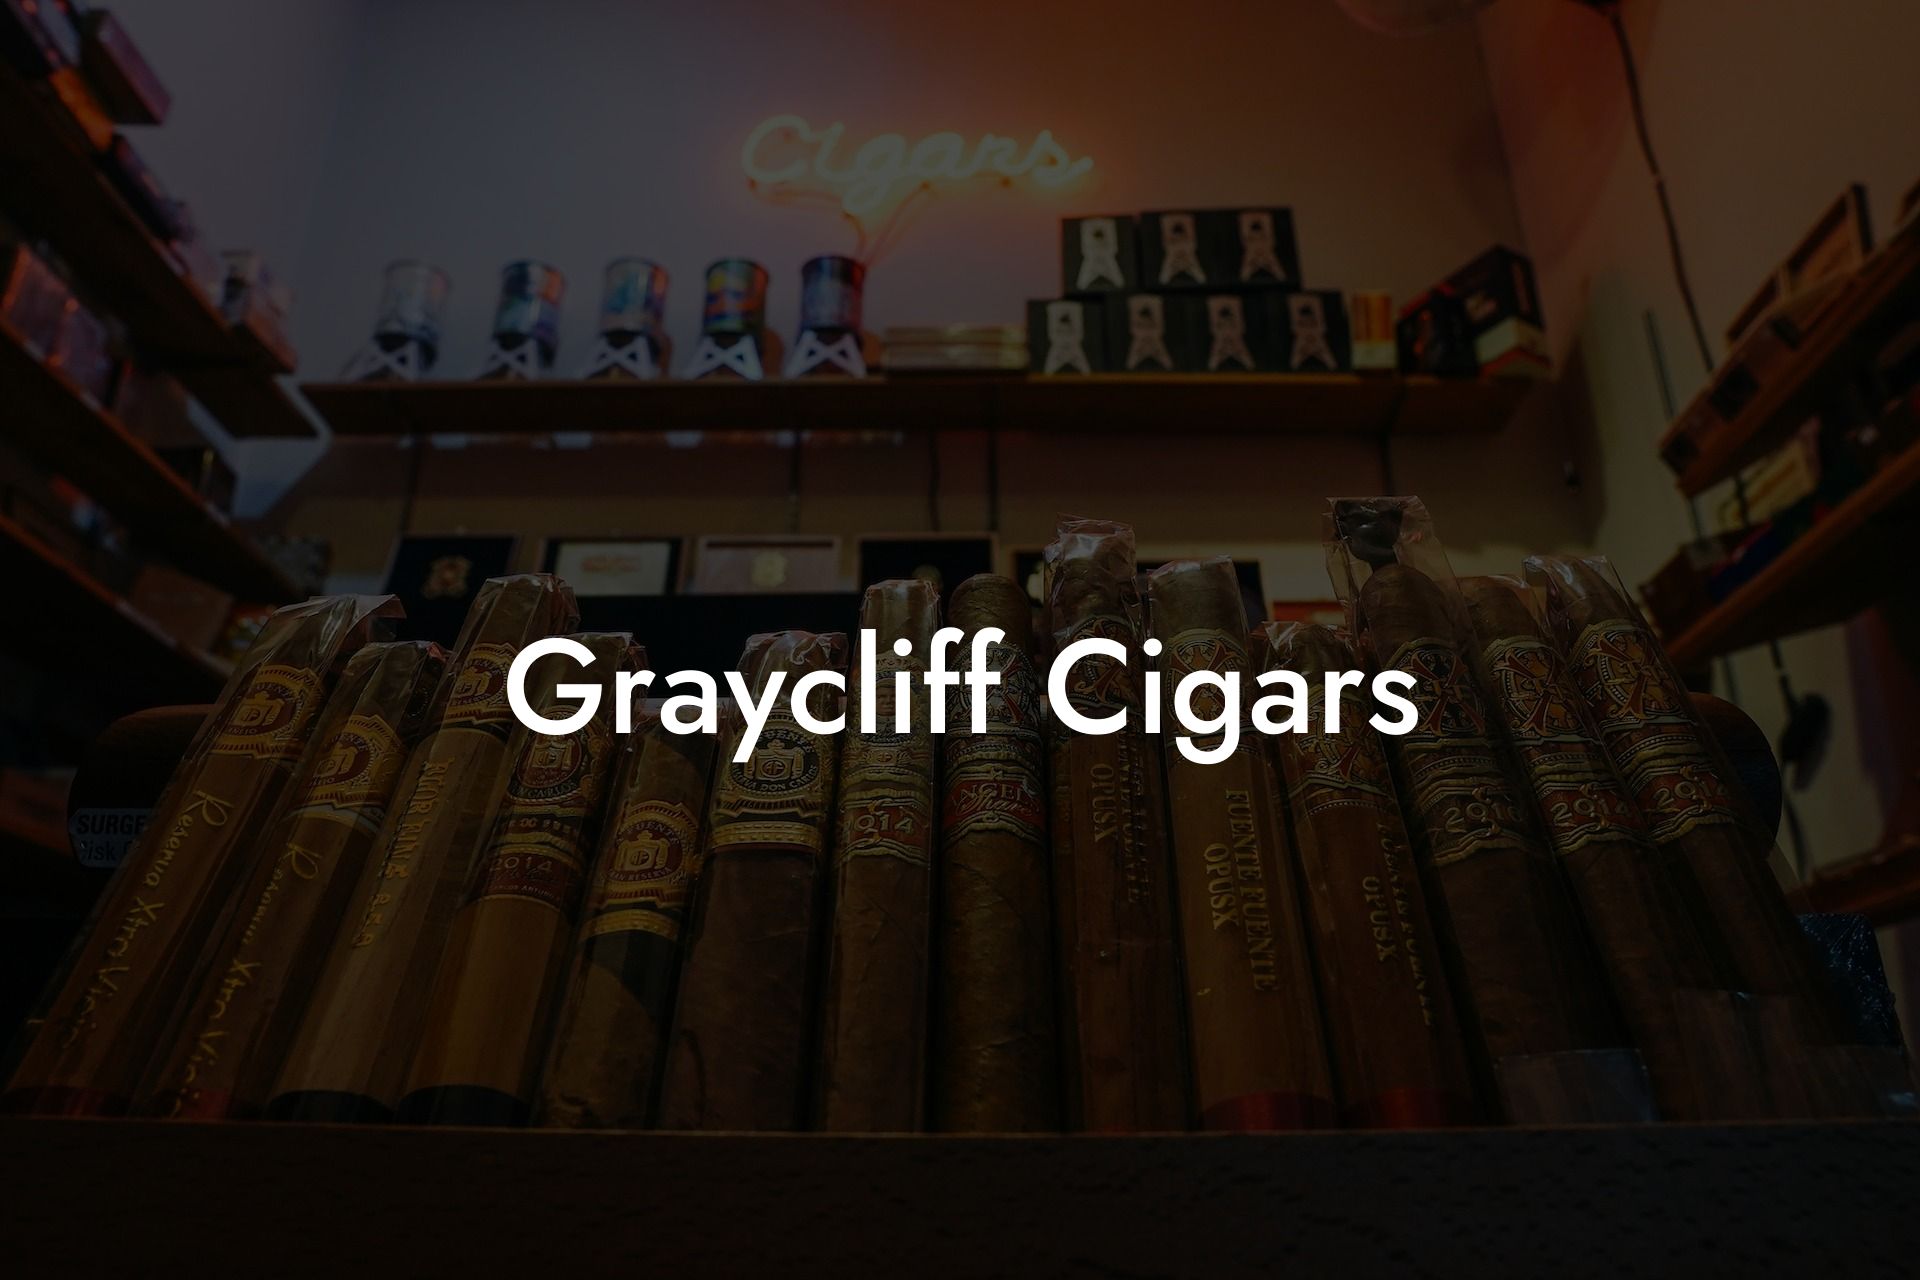 Graycliff Cigars